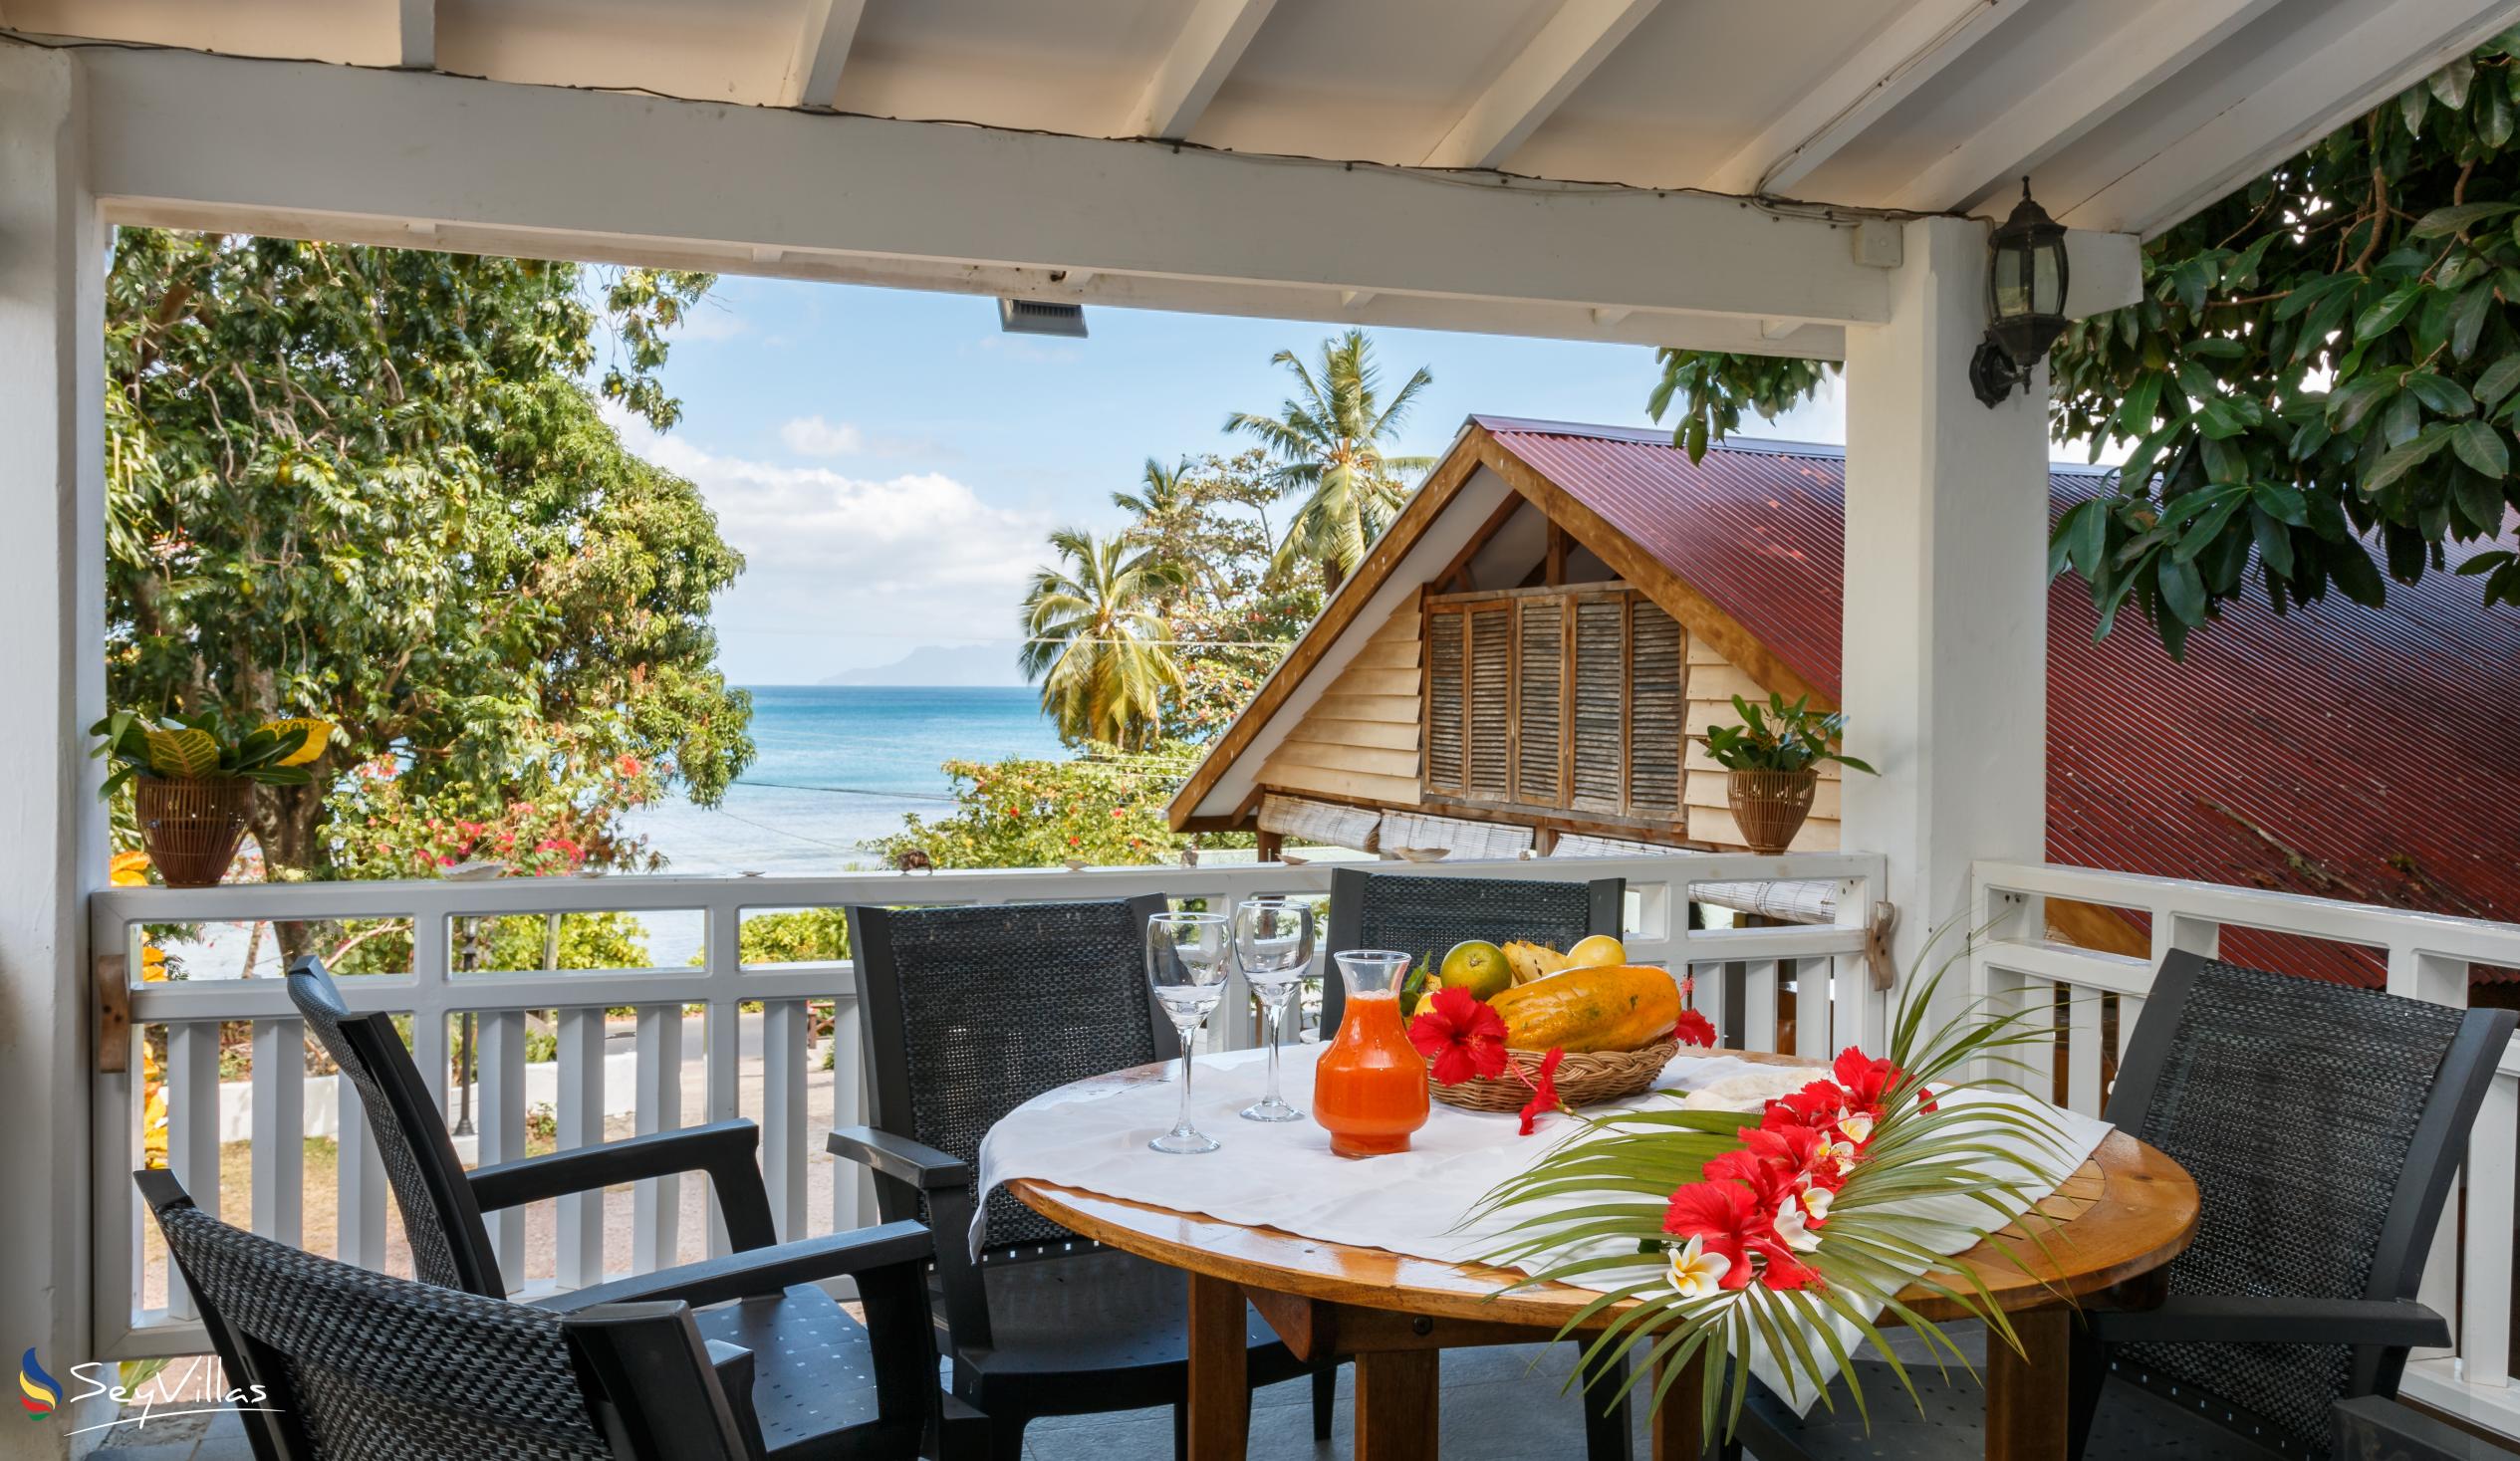 Photo 73: The Beach House (Chateau Martha) - 1-Bedroom Holiday Home - Mahé (Seychelles)